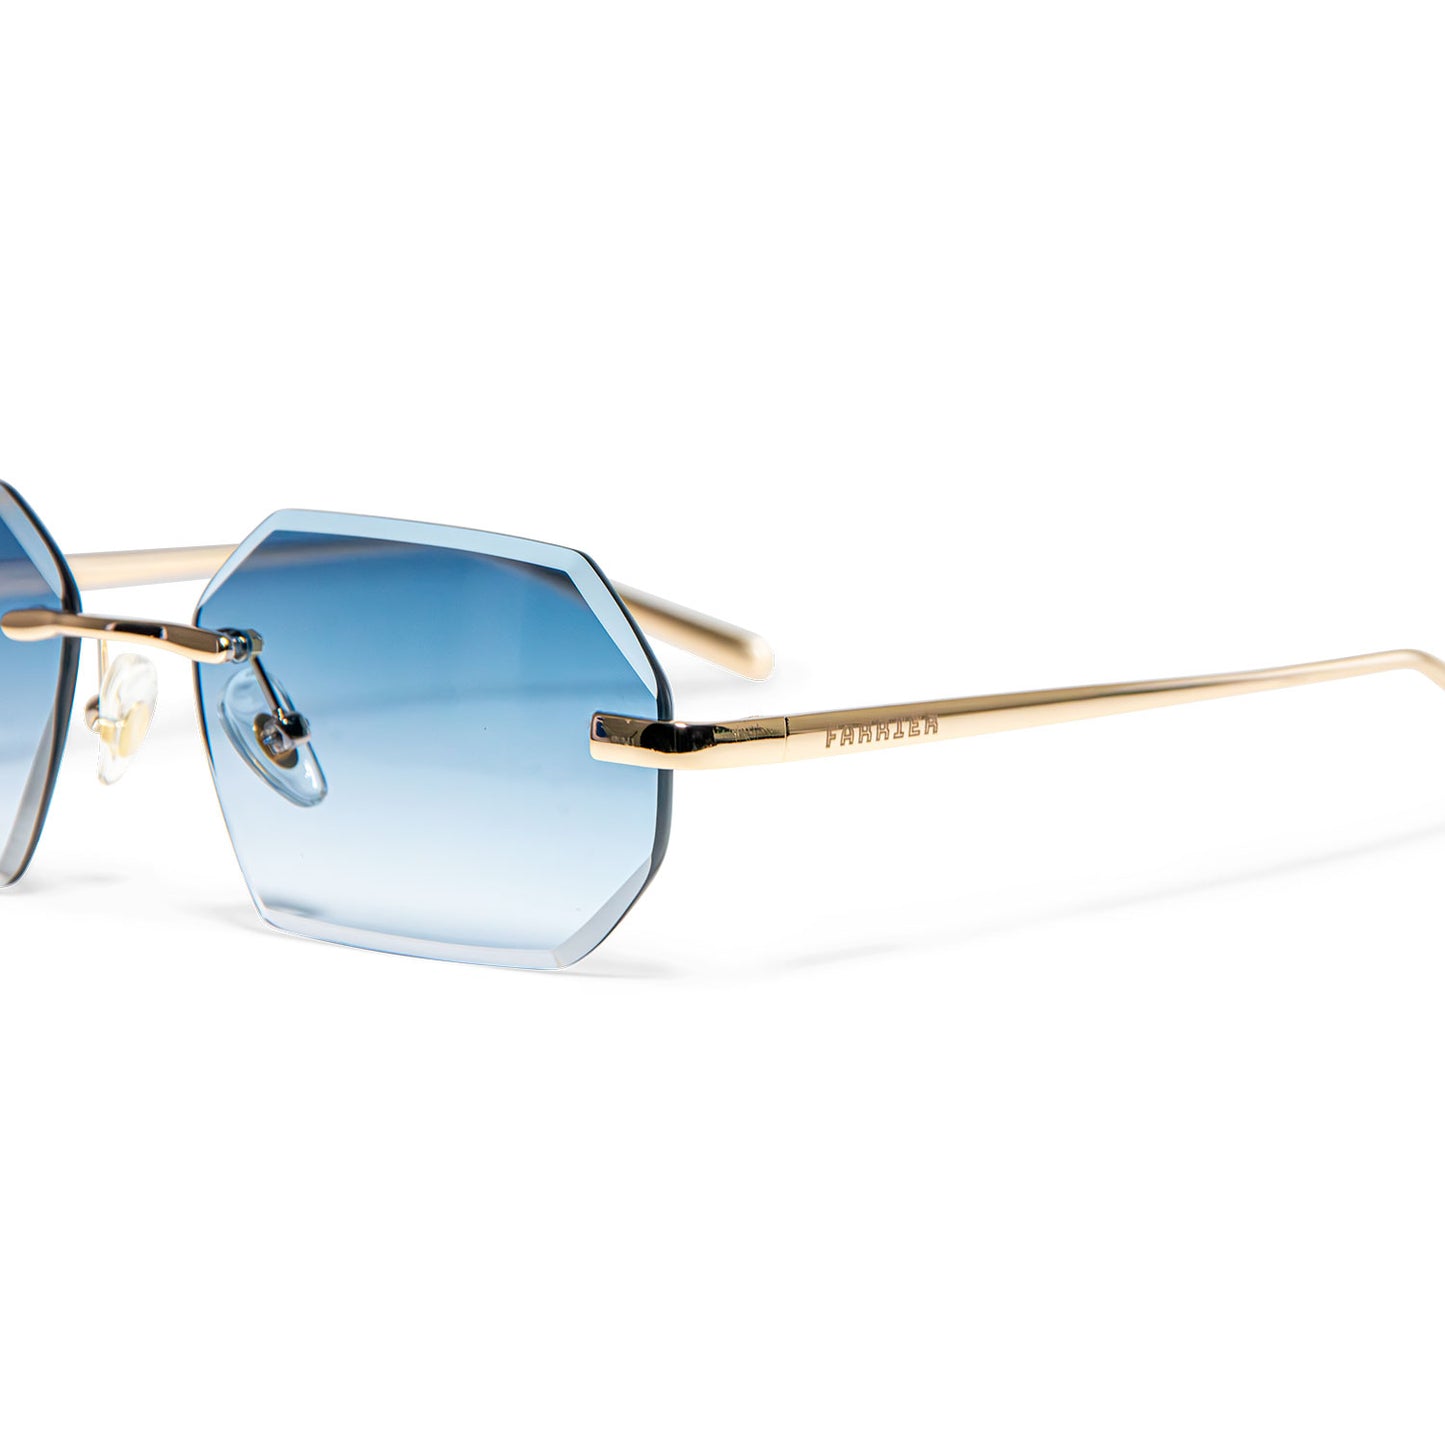 Randloze Zonnebril Nordyn Blue Blauwe Glazen Zijkant Detail 1